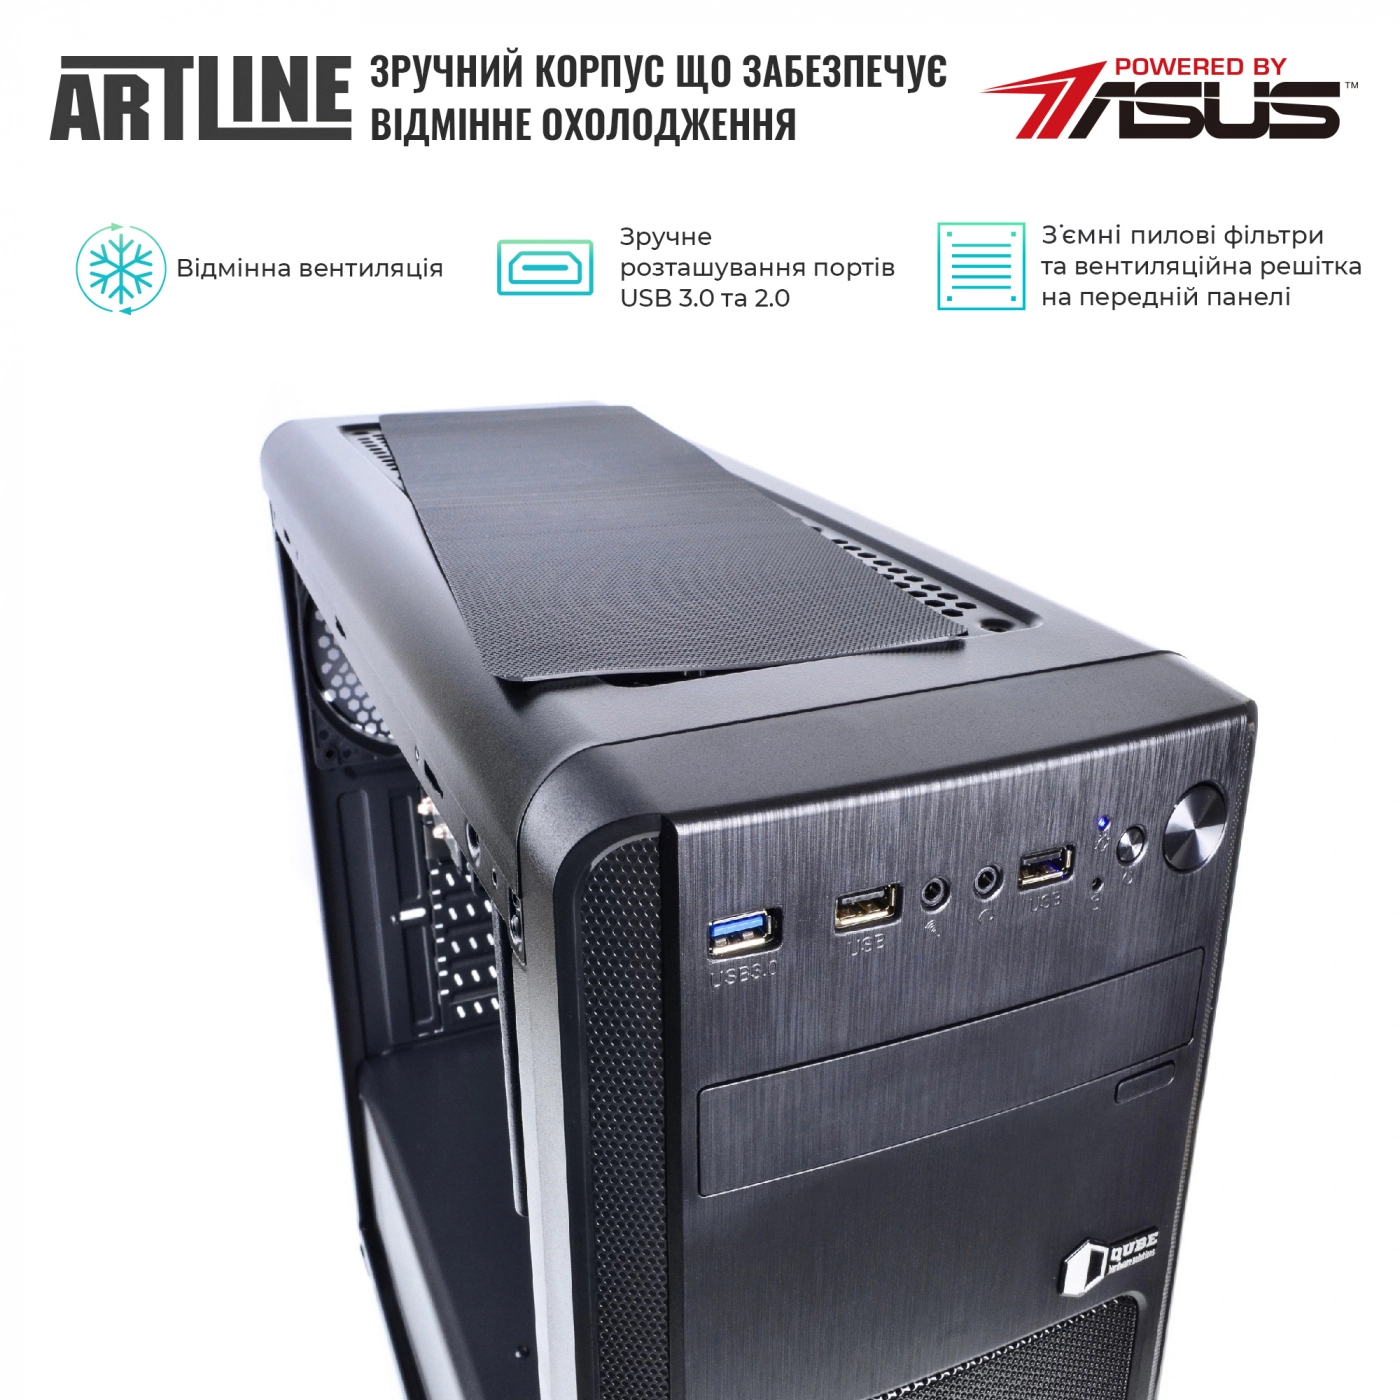 Купити Сервер ARTLINE Business T25v17 - фото 2